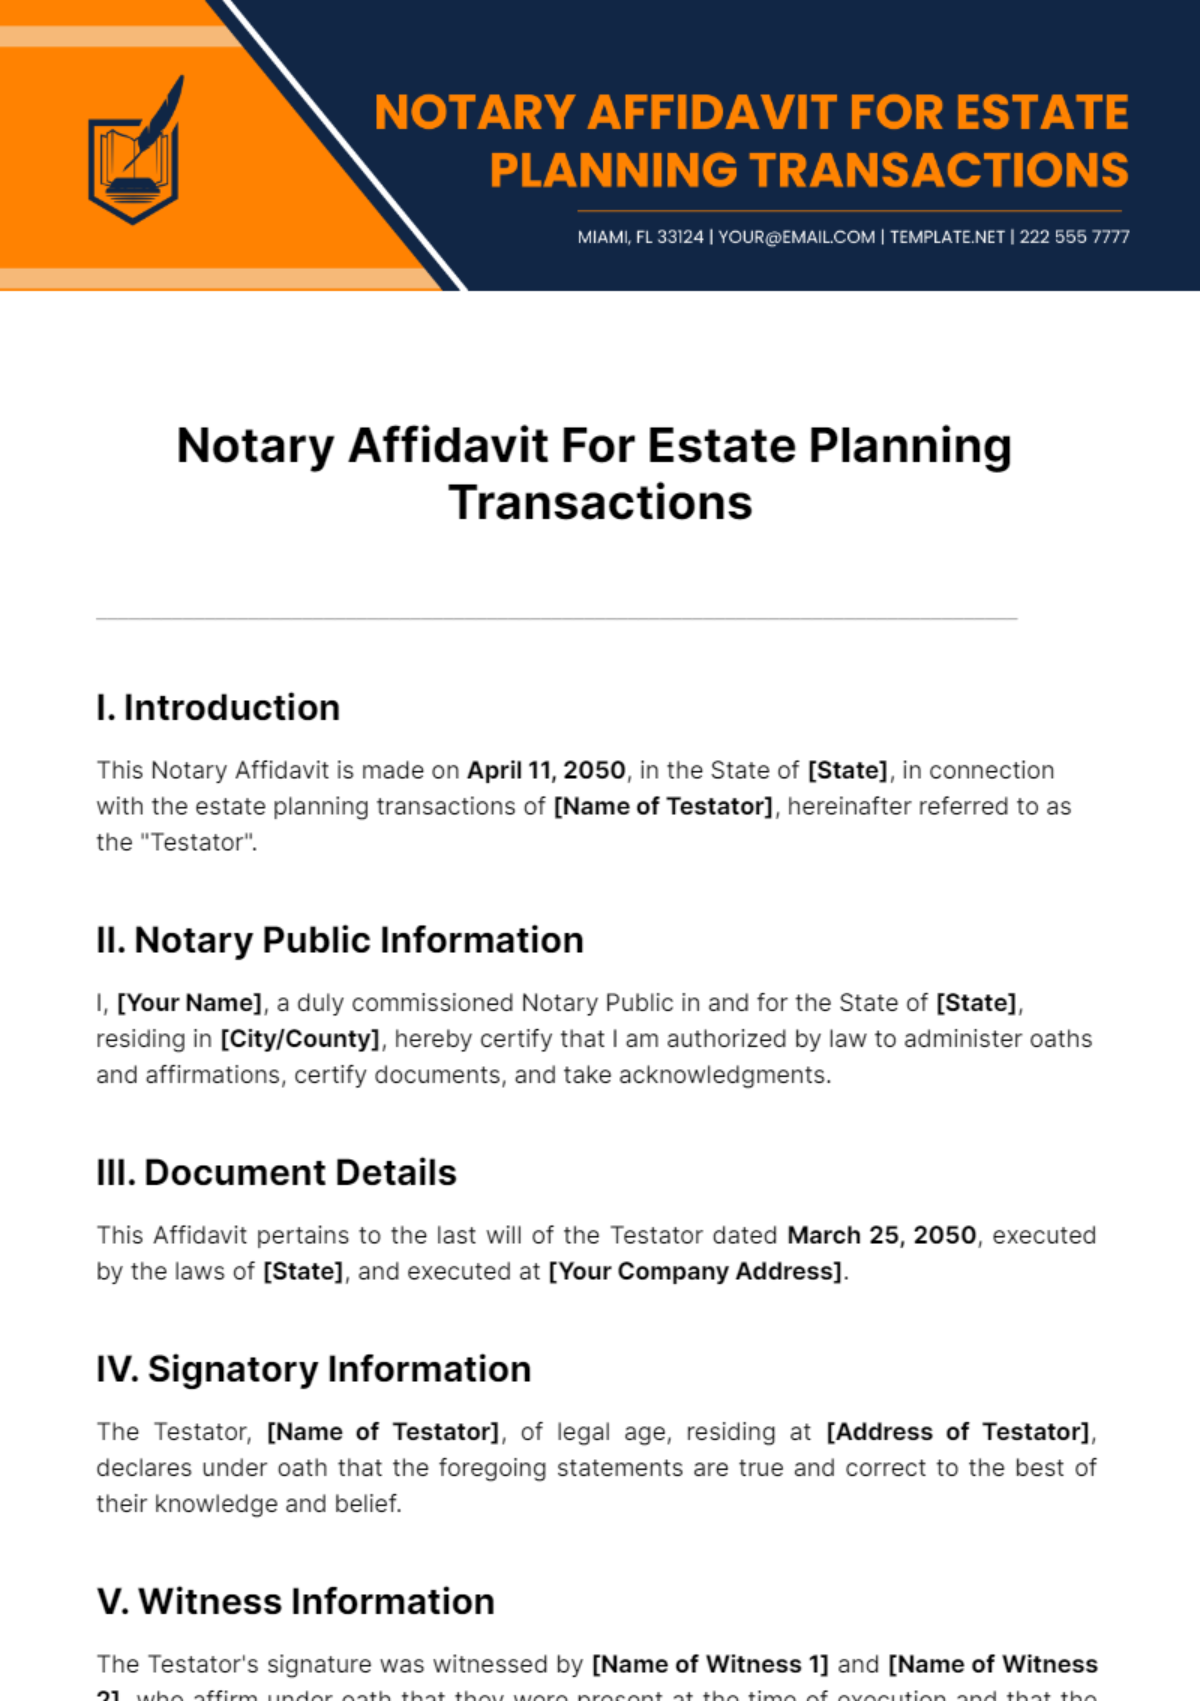 Notary Affidavit For Estate Planning Transactions Template